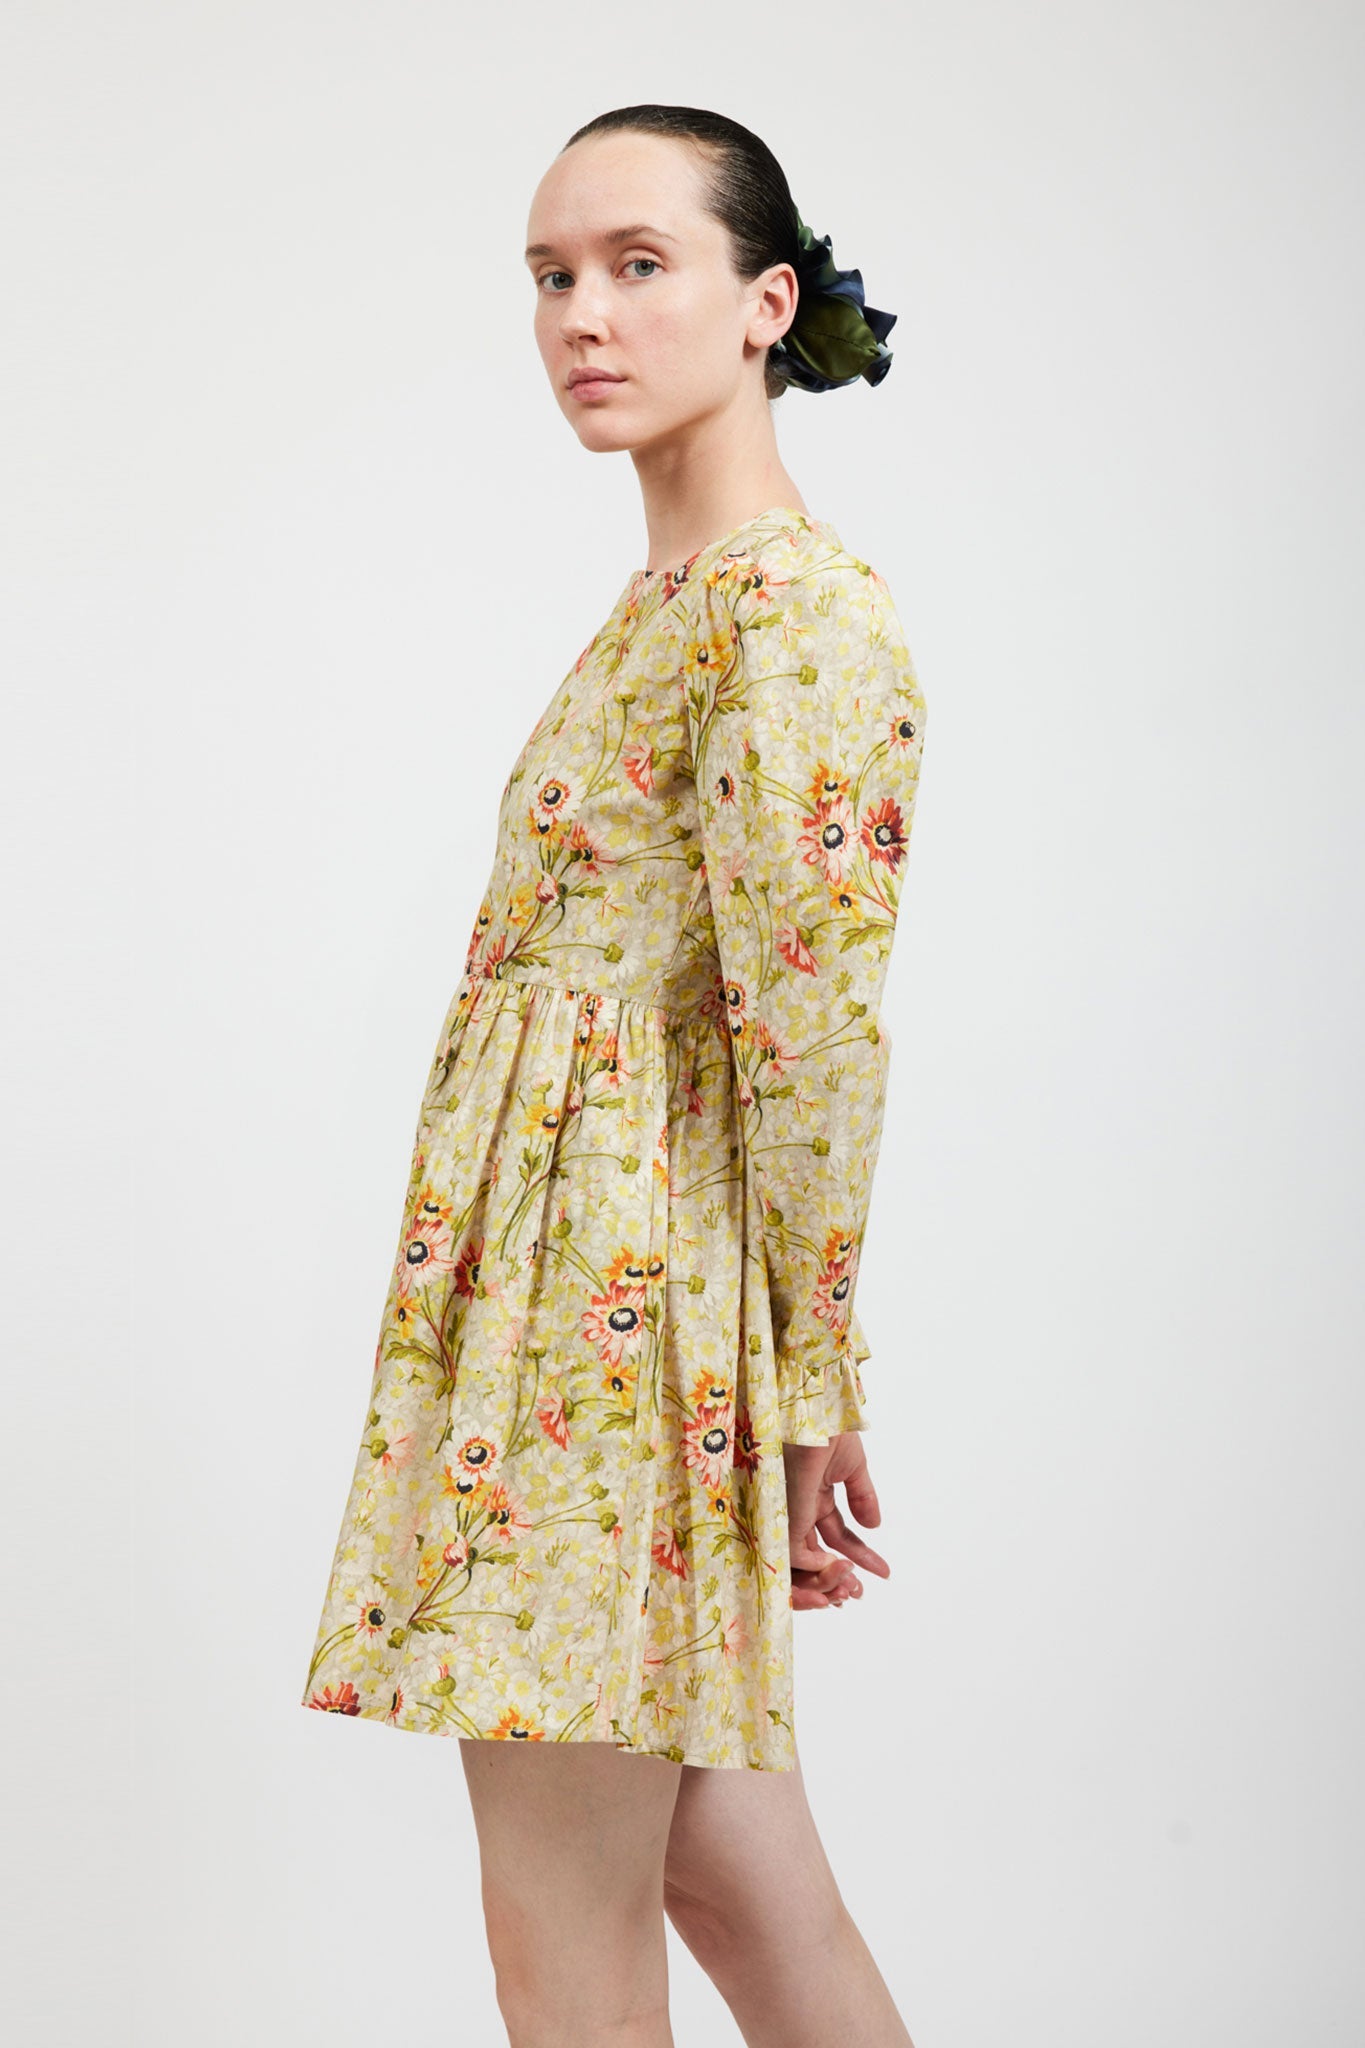 Laura Ashley x BATSHEVA Square Neck Mini Prairie Dress in Witton Floral